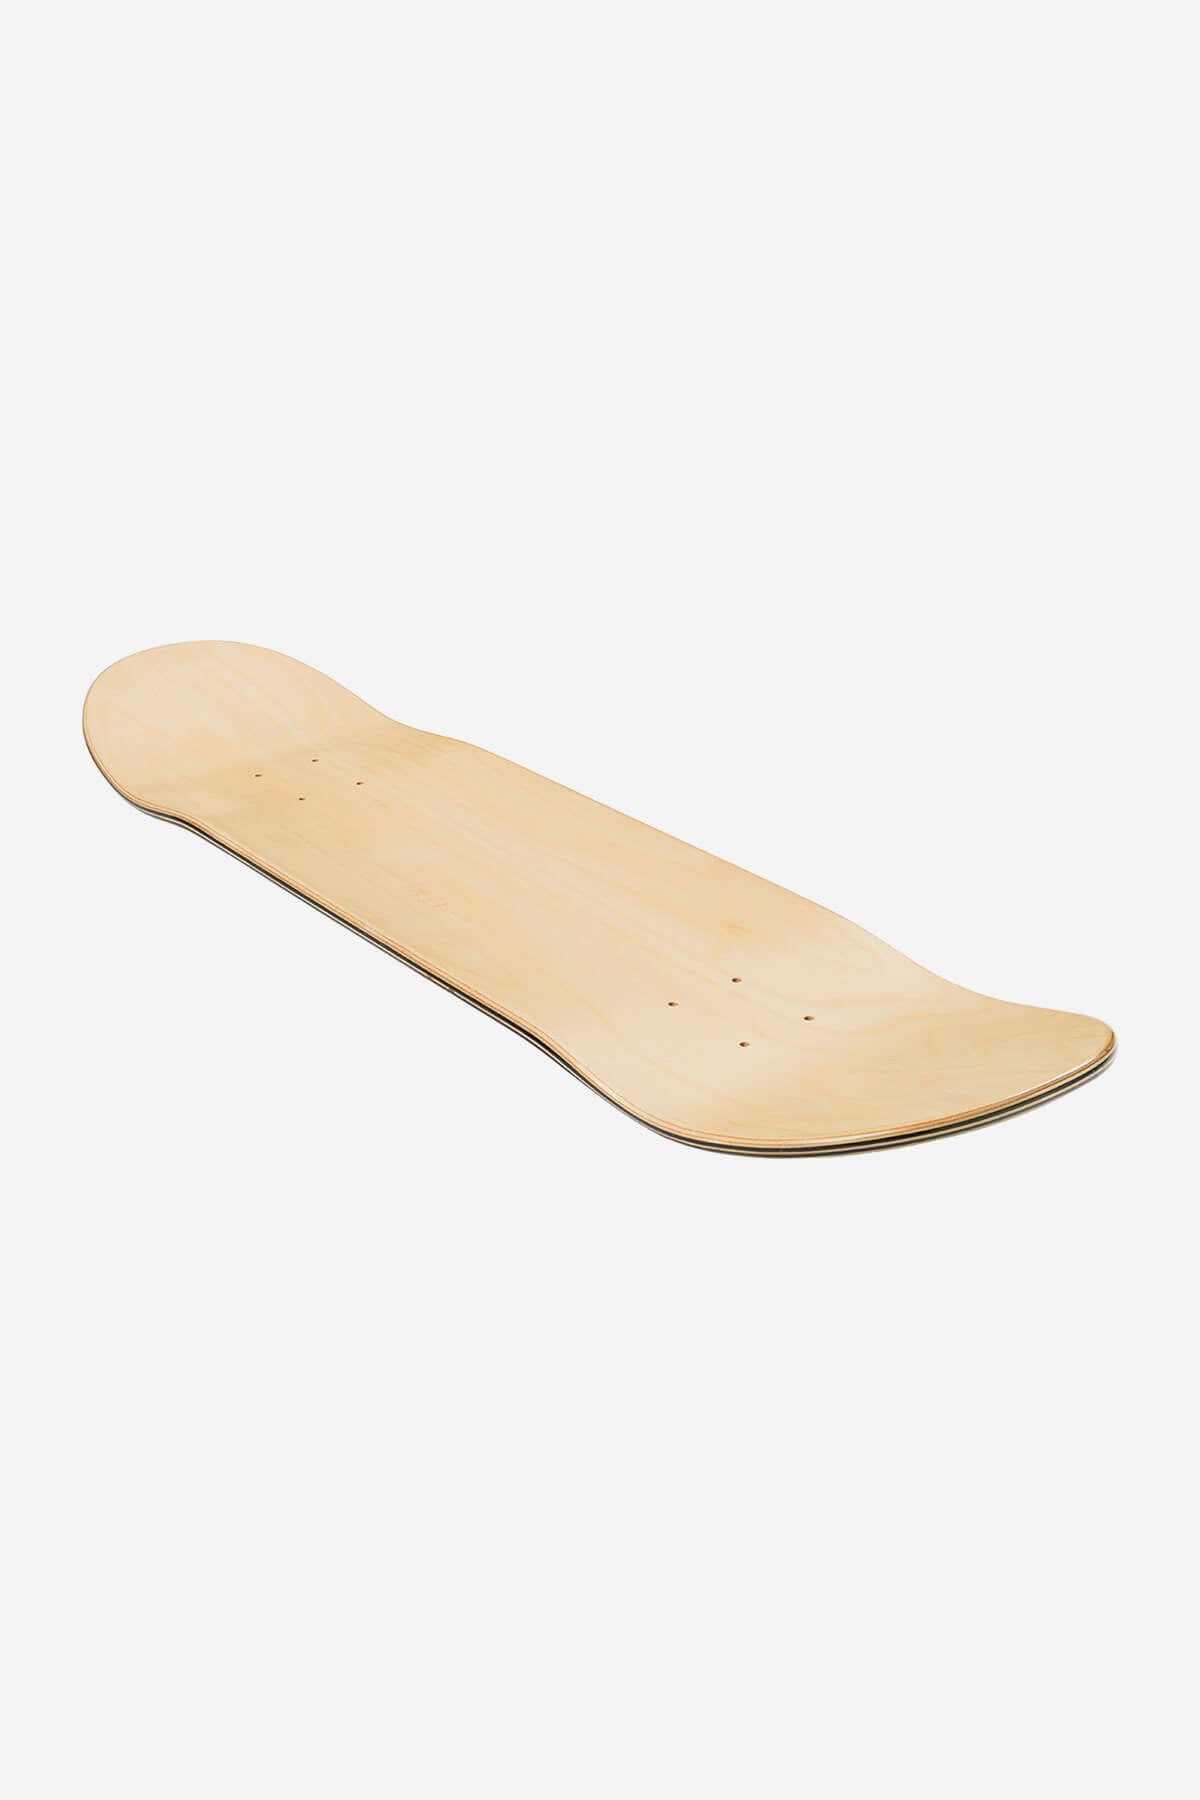 Globe - G1 Lijnvorm - Olive - 8.0" Skateboard Deck